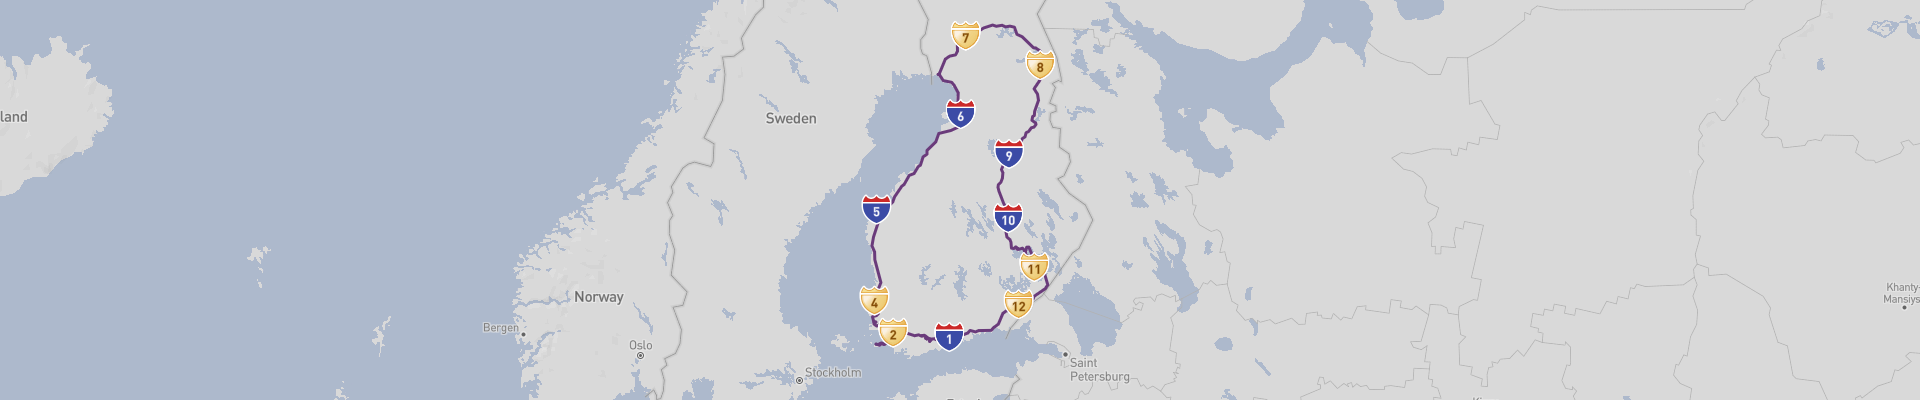 Finland Road Trip